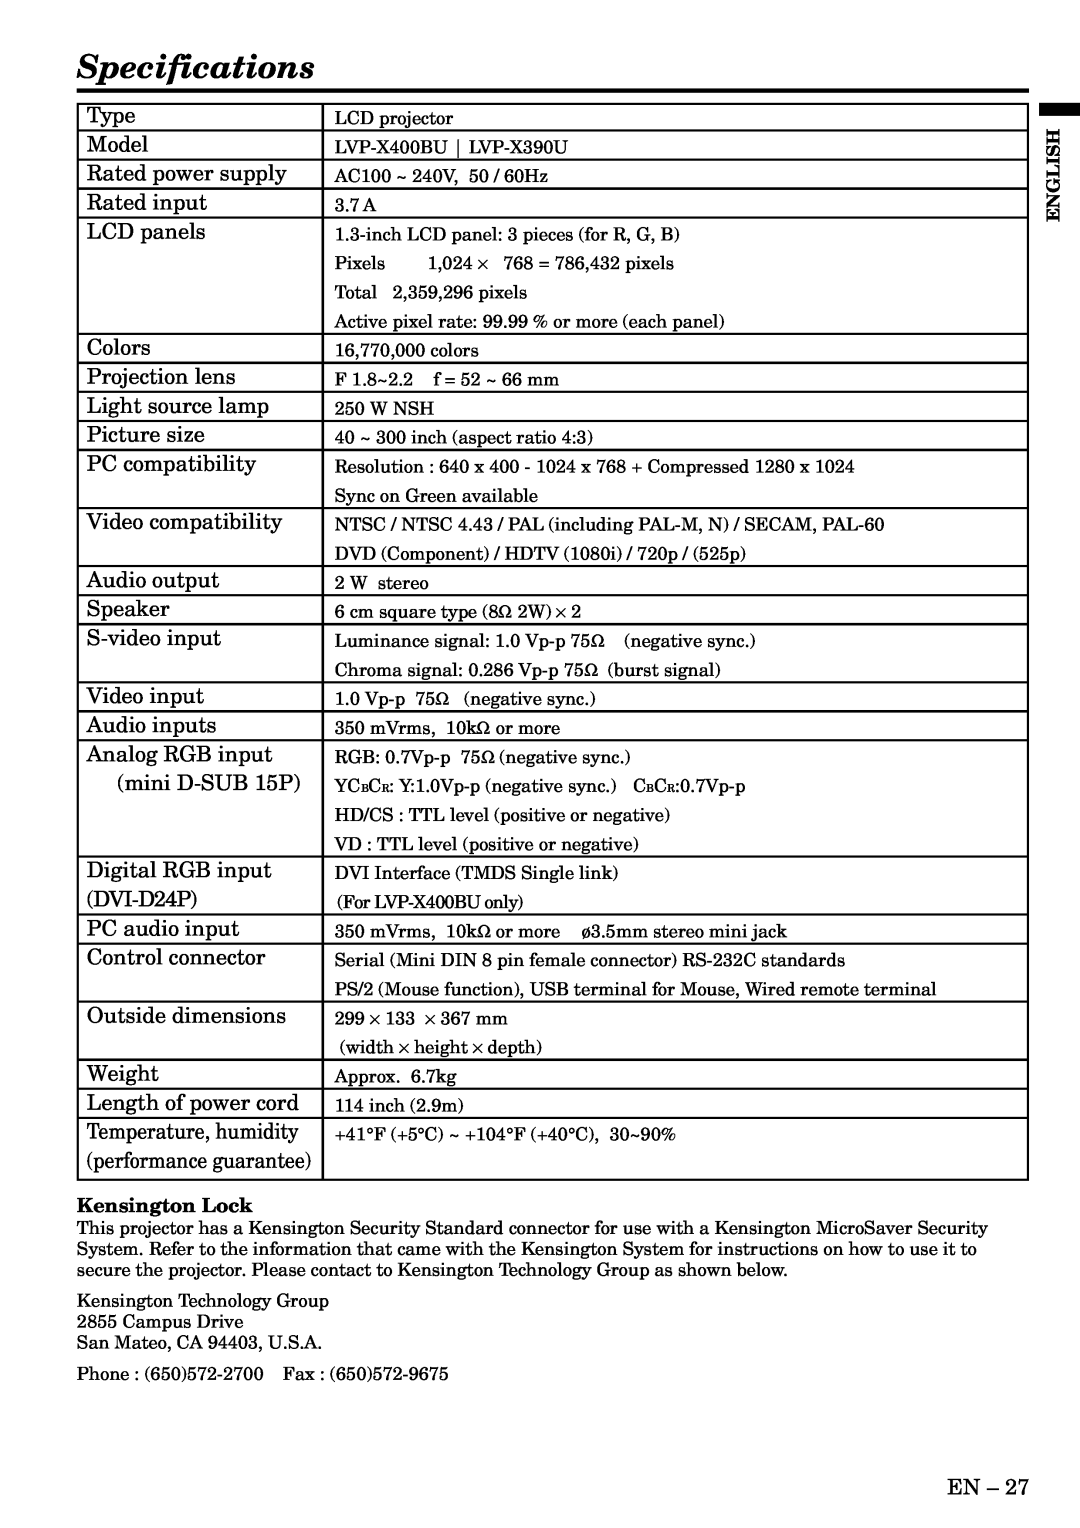 Mitsubishi Electronics LVP-X400BU user manual Specifications, Kensington Lock 